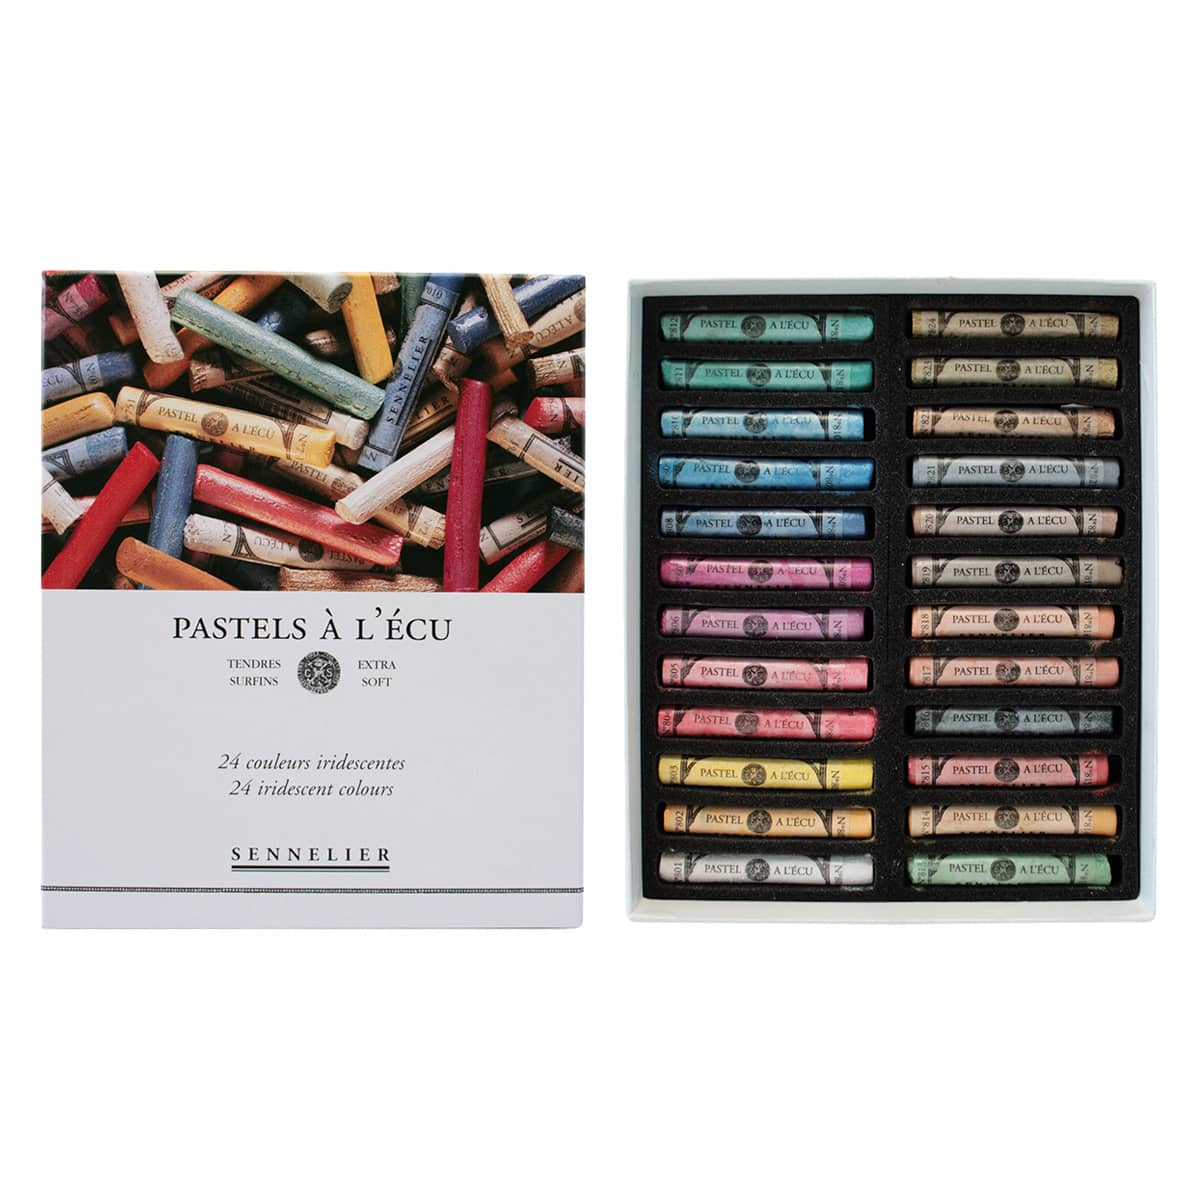 Sennelier Extra Soft Pastel Cardboard Box Set of 24 - Iridescent Colors